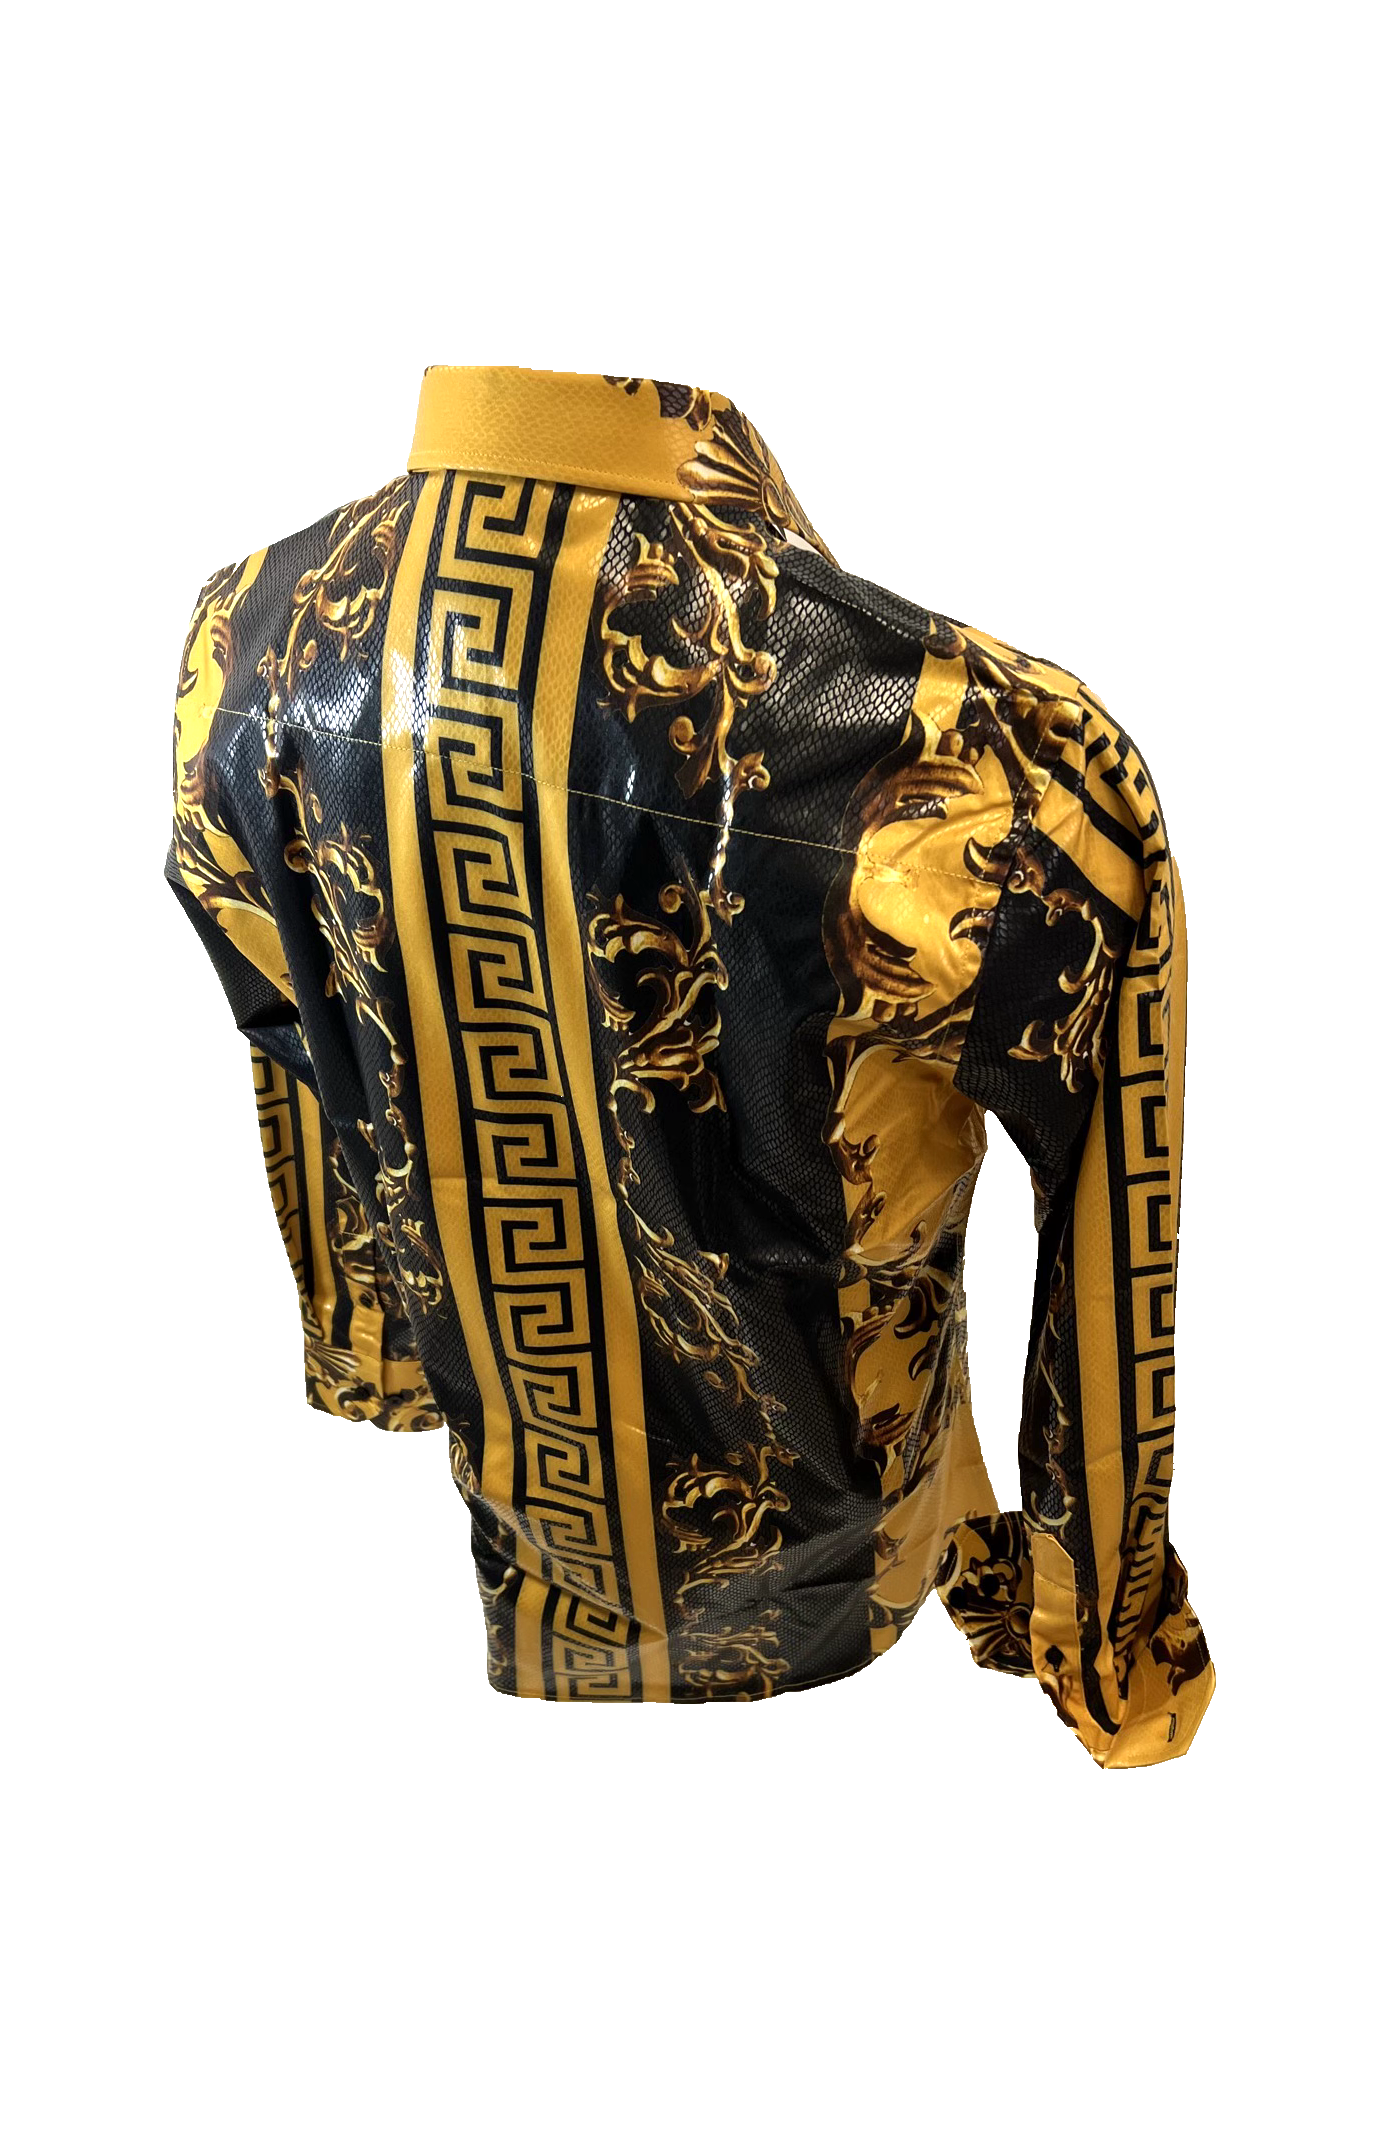 Men's Long Sleeve Button Down Dress Shirt Black Gold Geometric Leaf Baroque